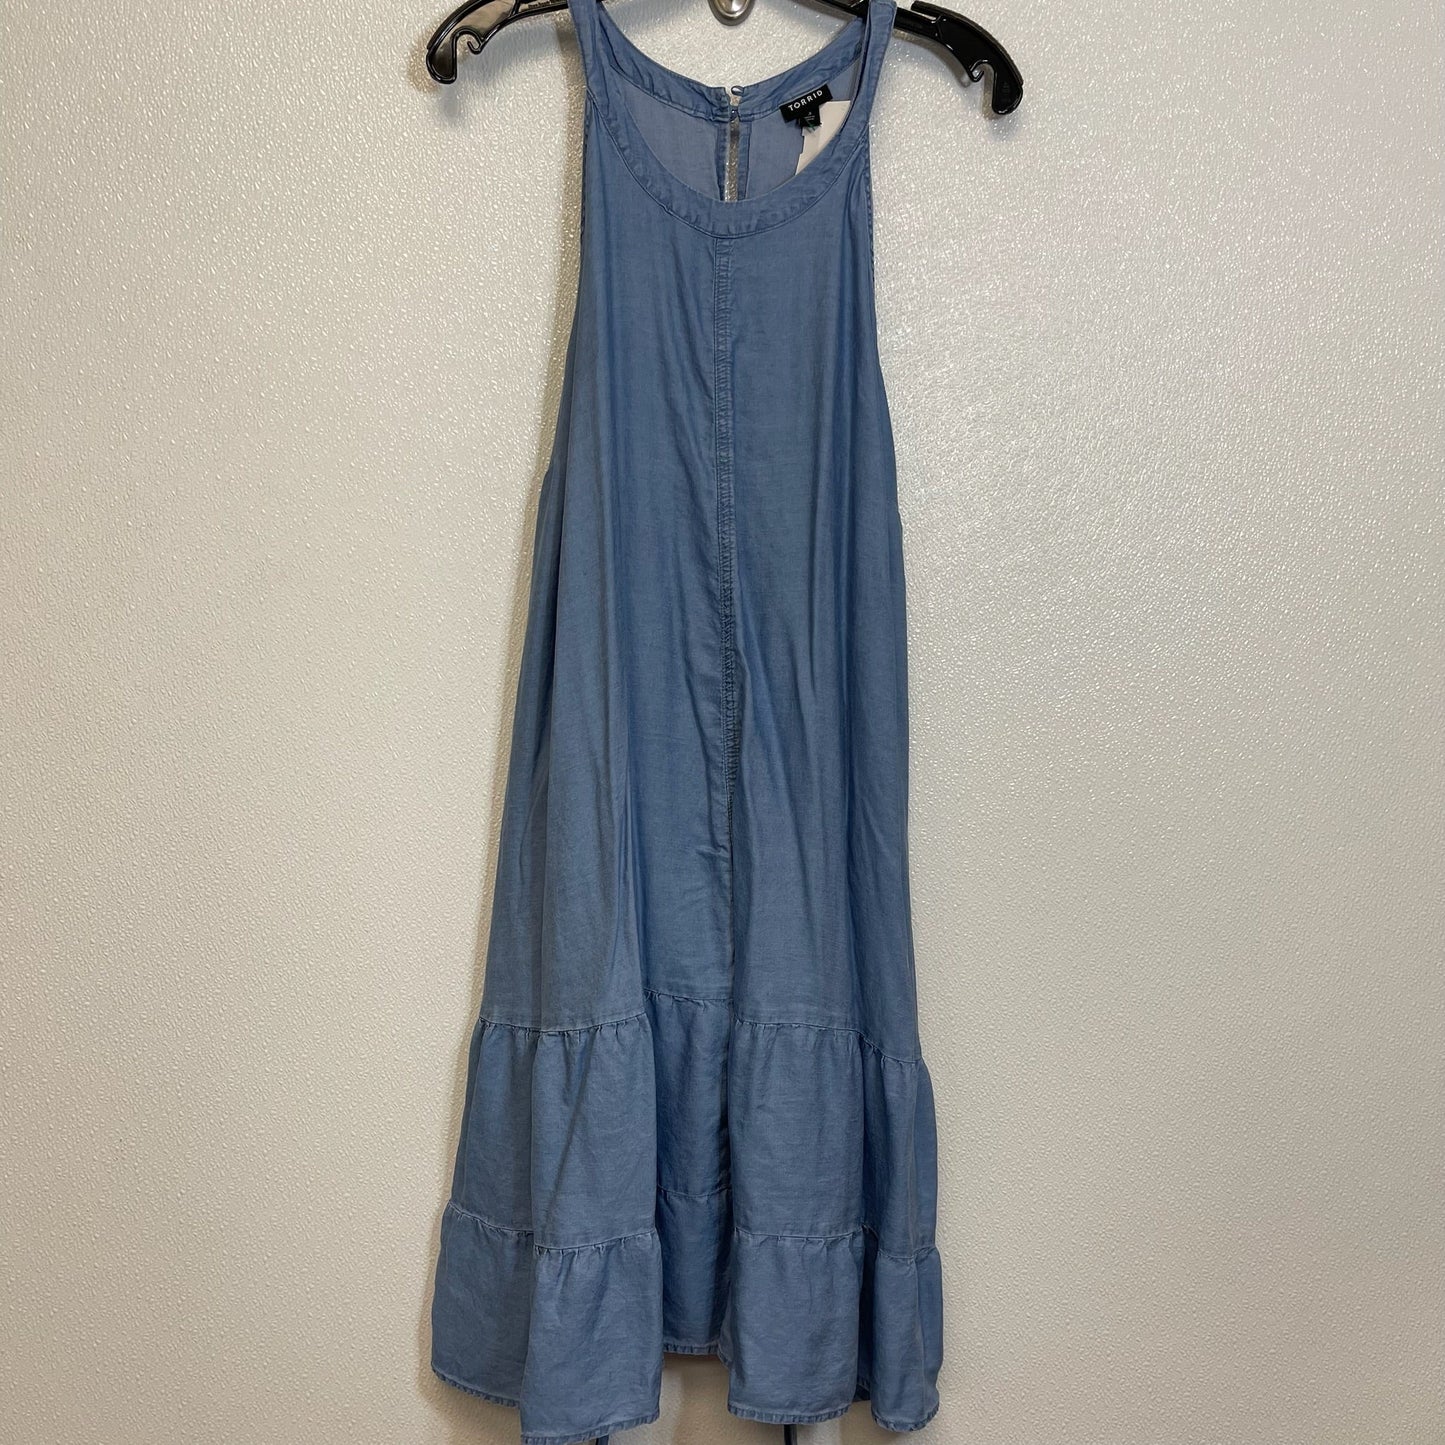 Denim Dress Casual Short Torrid, Size 3x